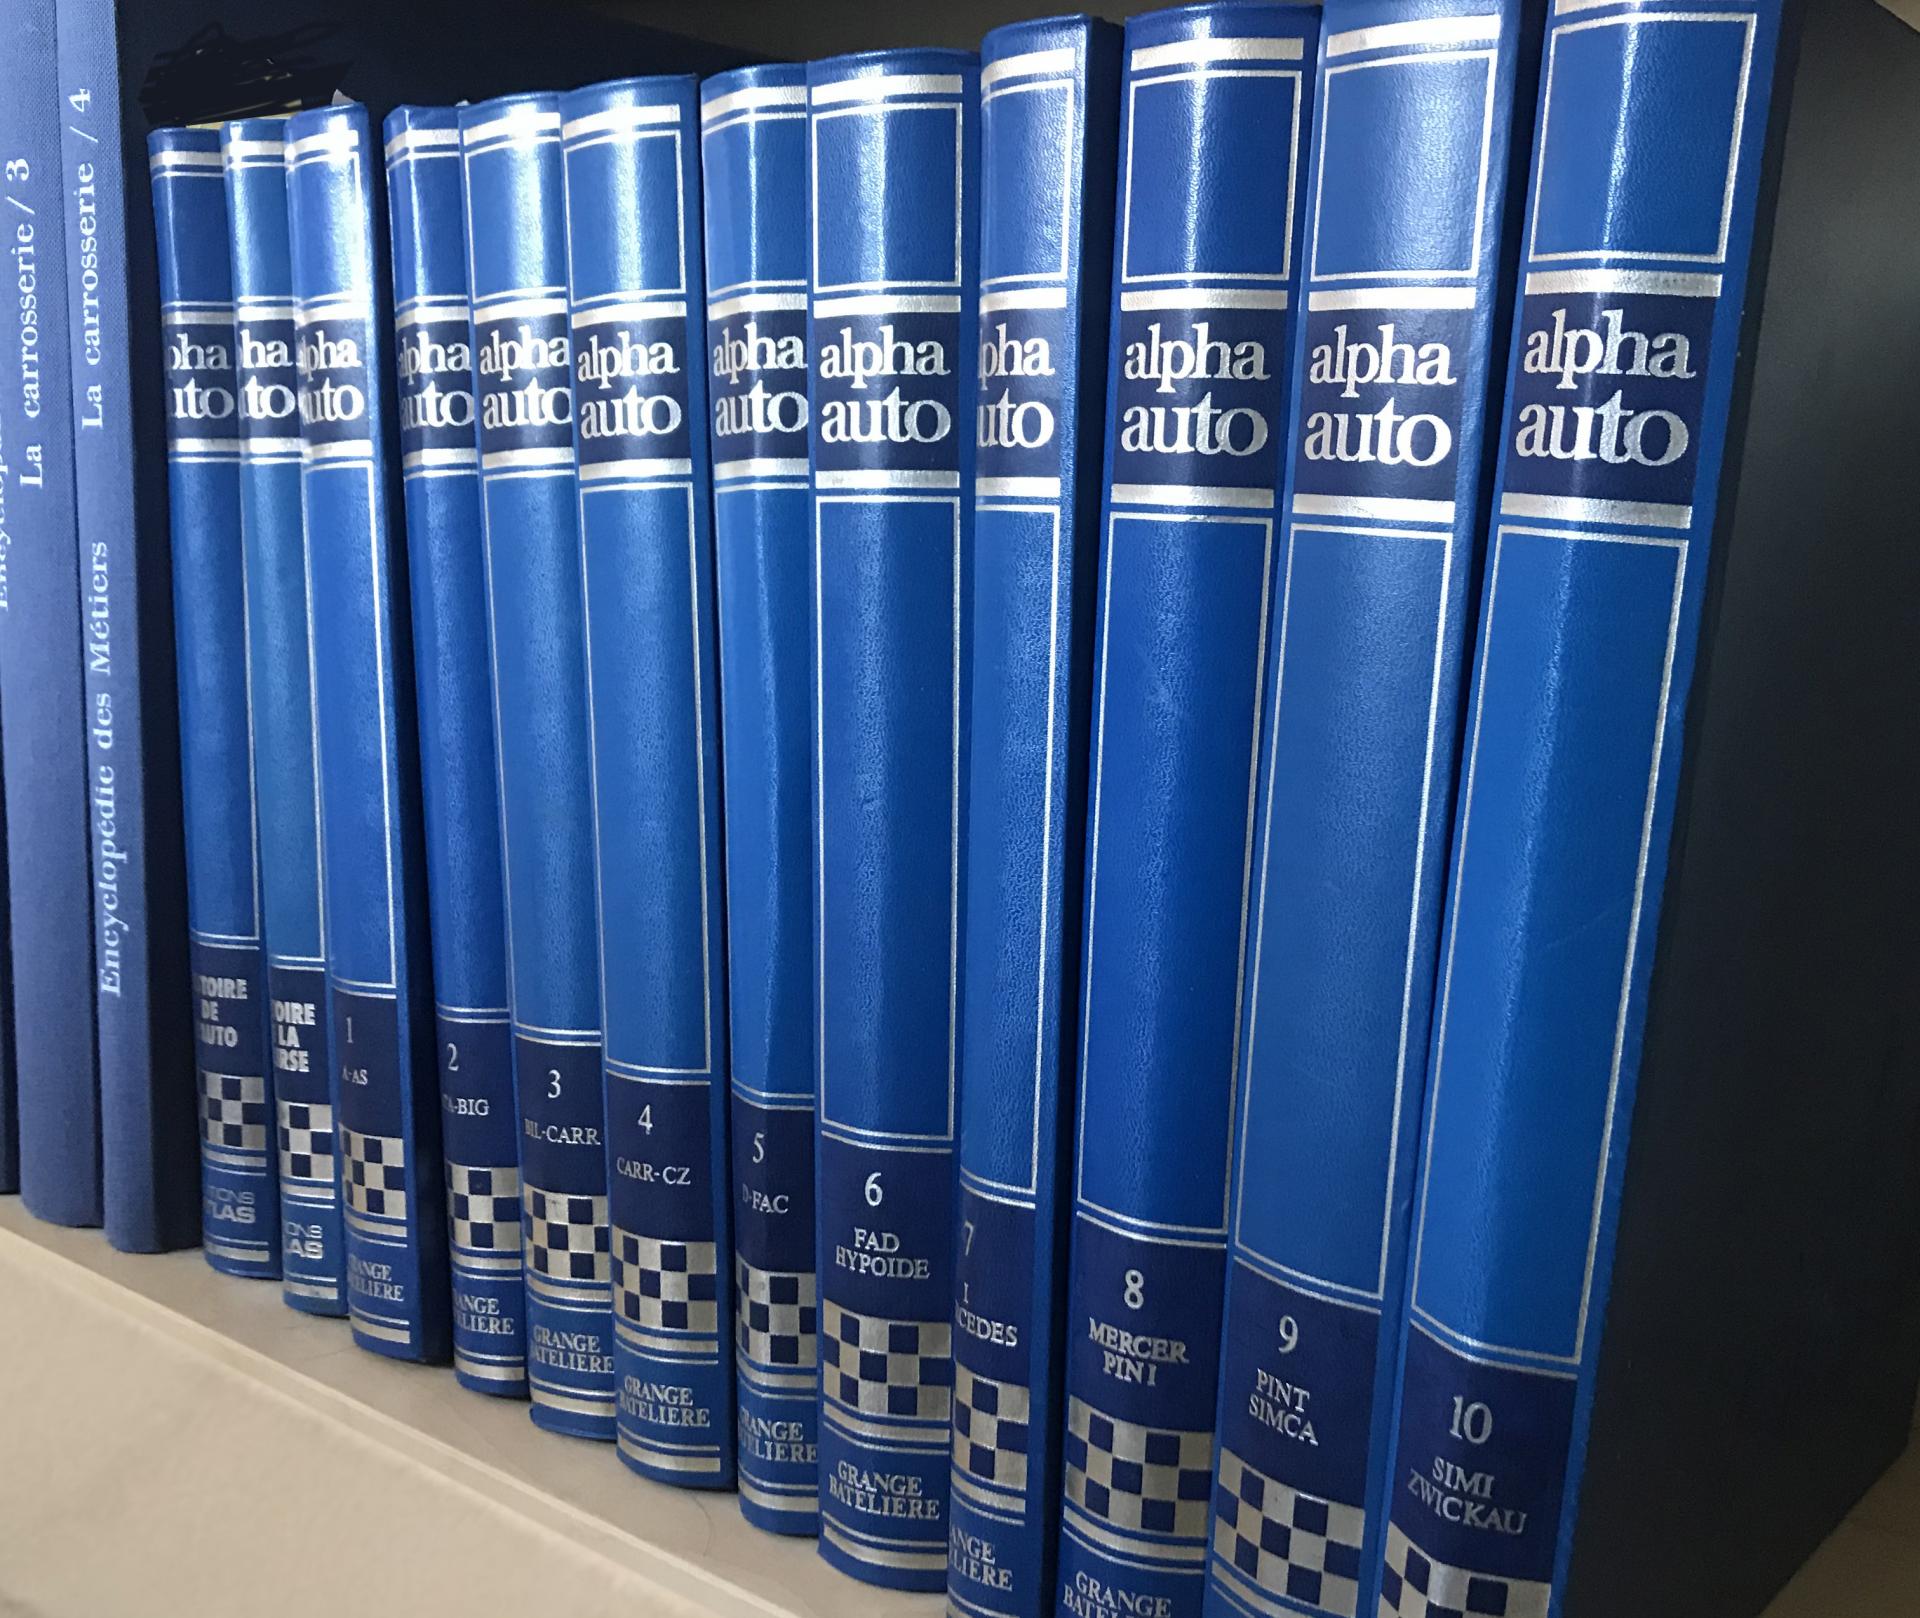 1976 Encyclopédie Alpha Auto